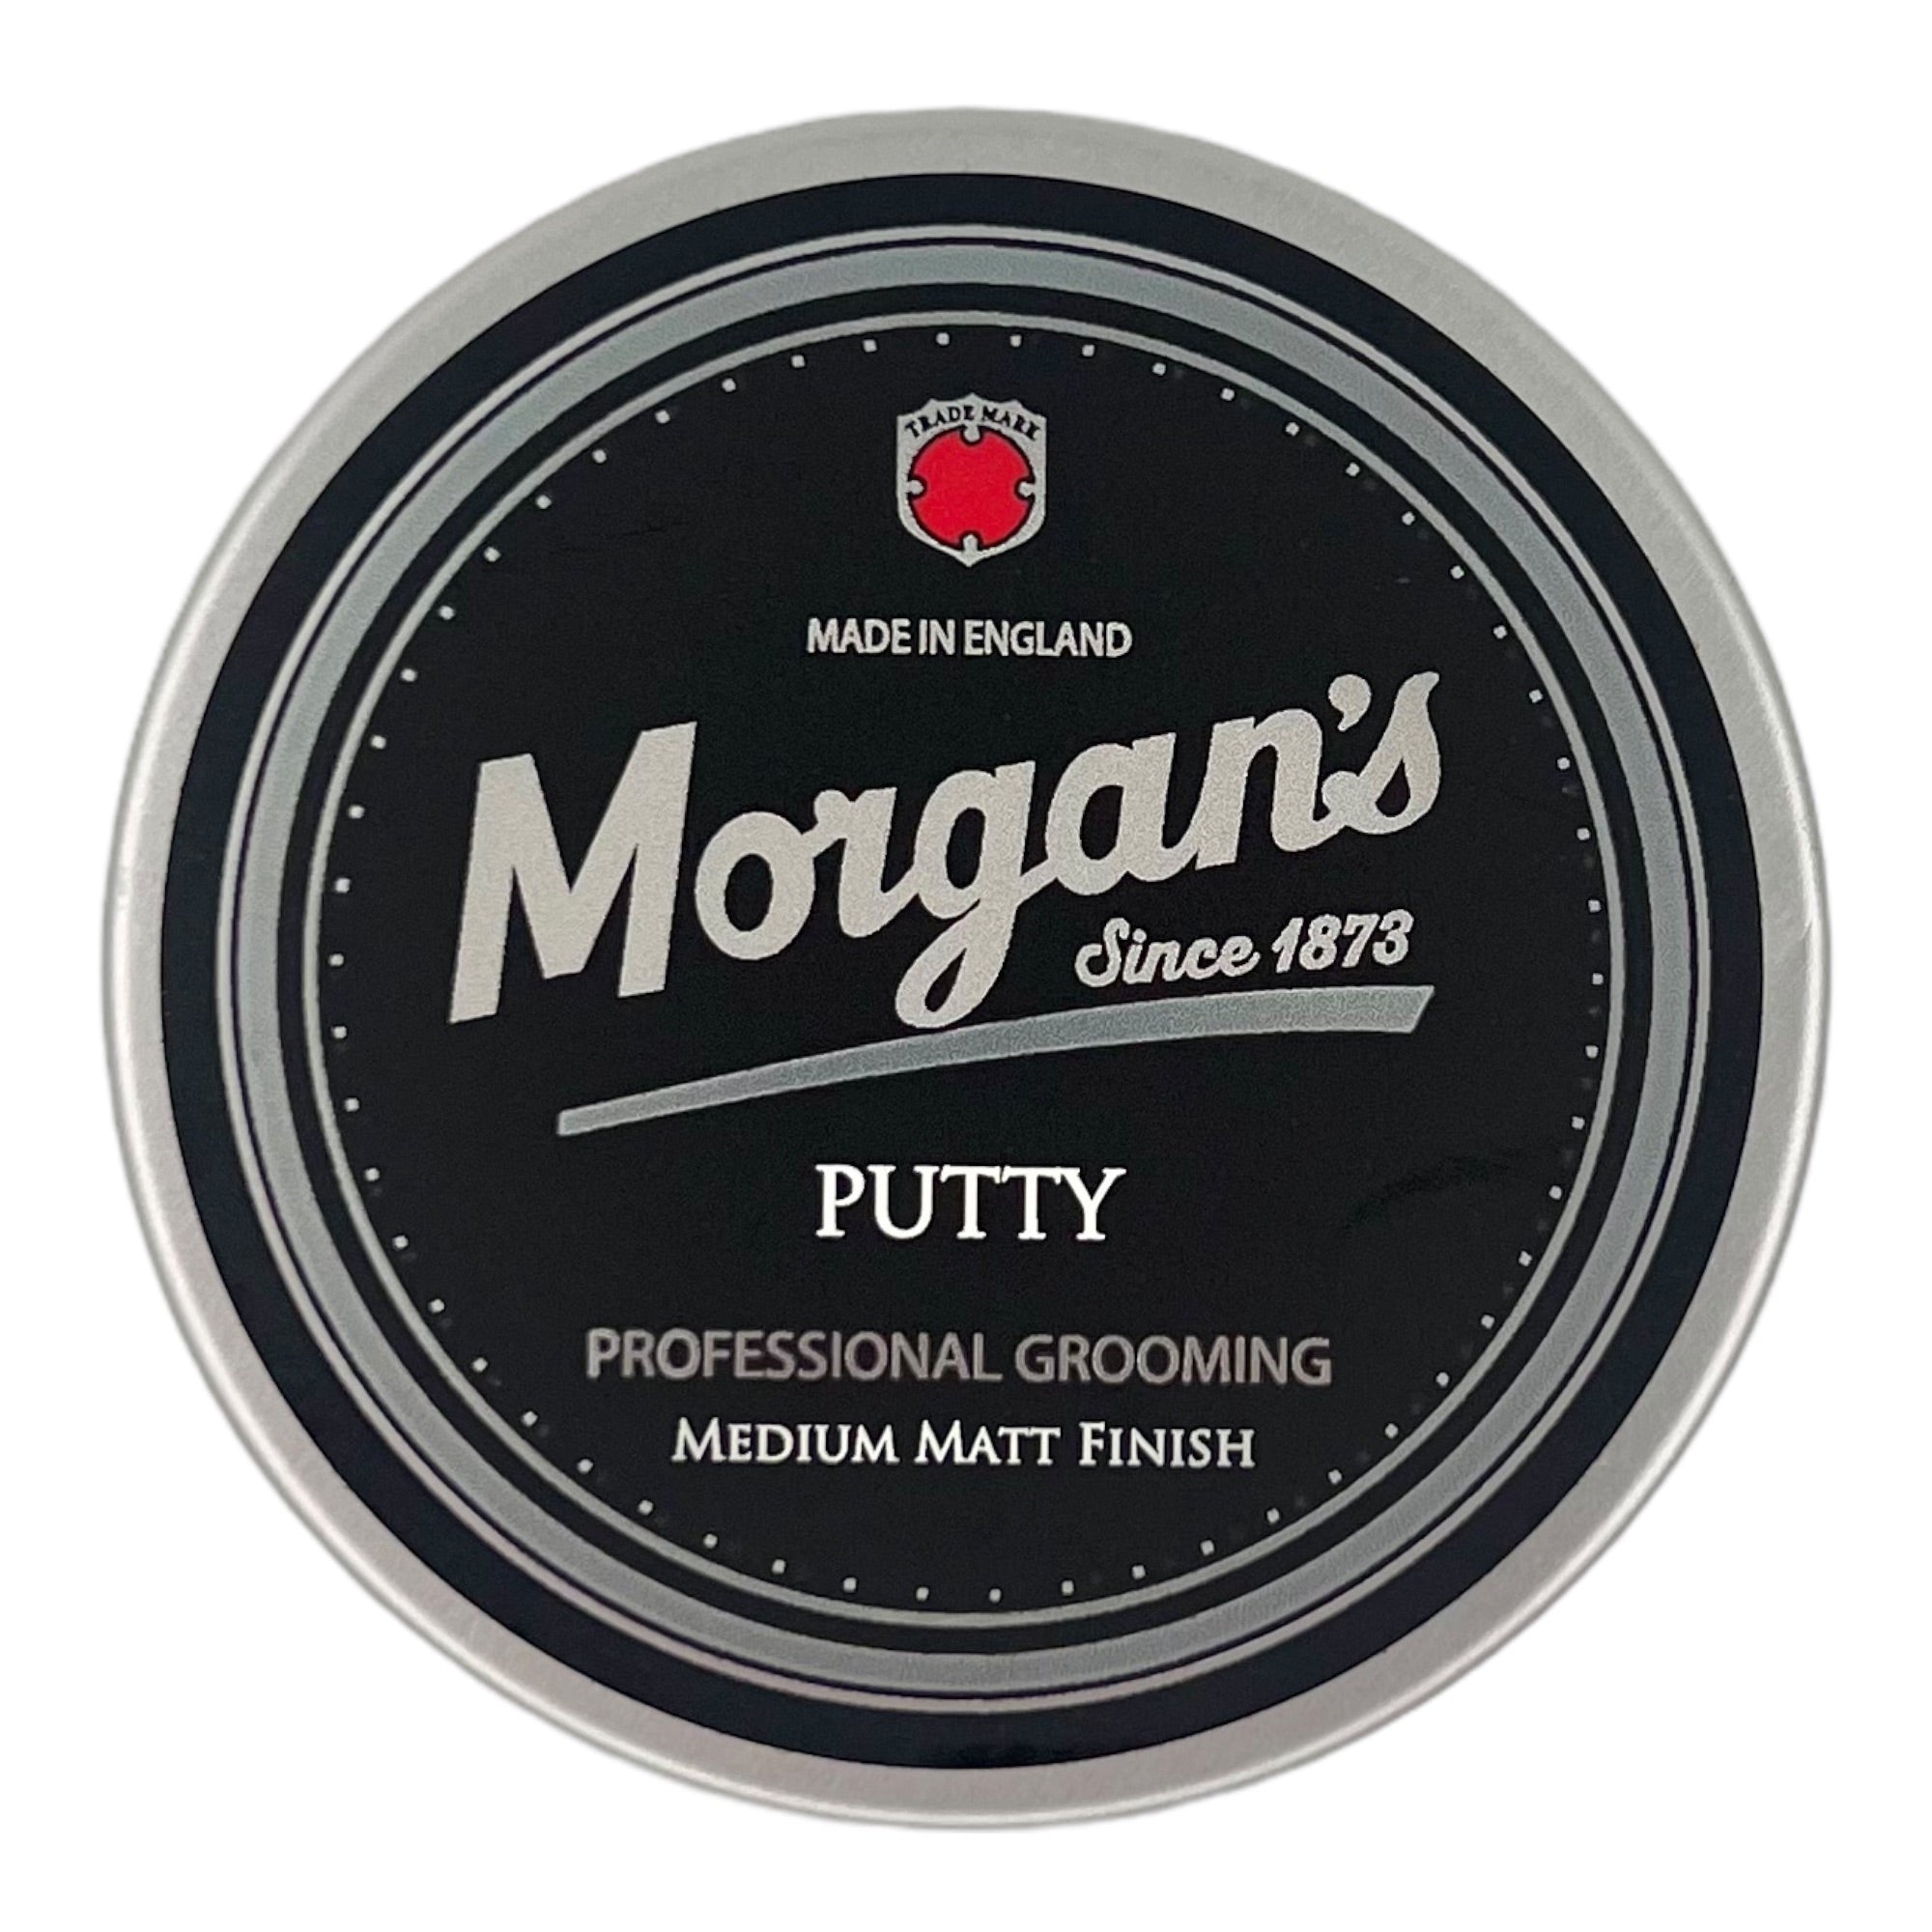 Morgan's - Putty Medium Matt Finish 75ml